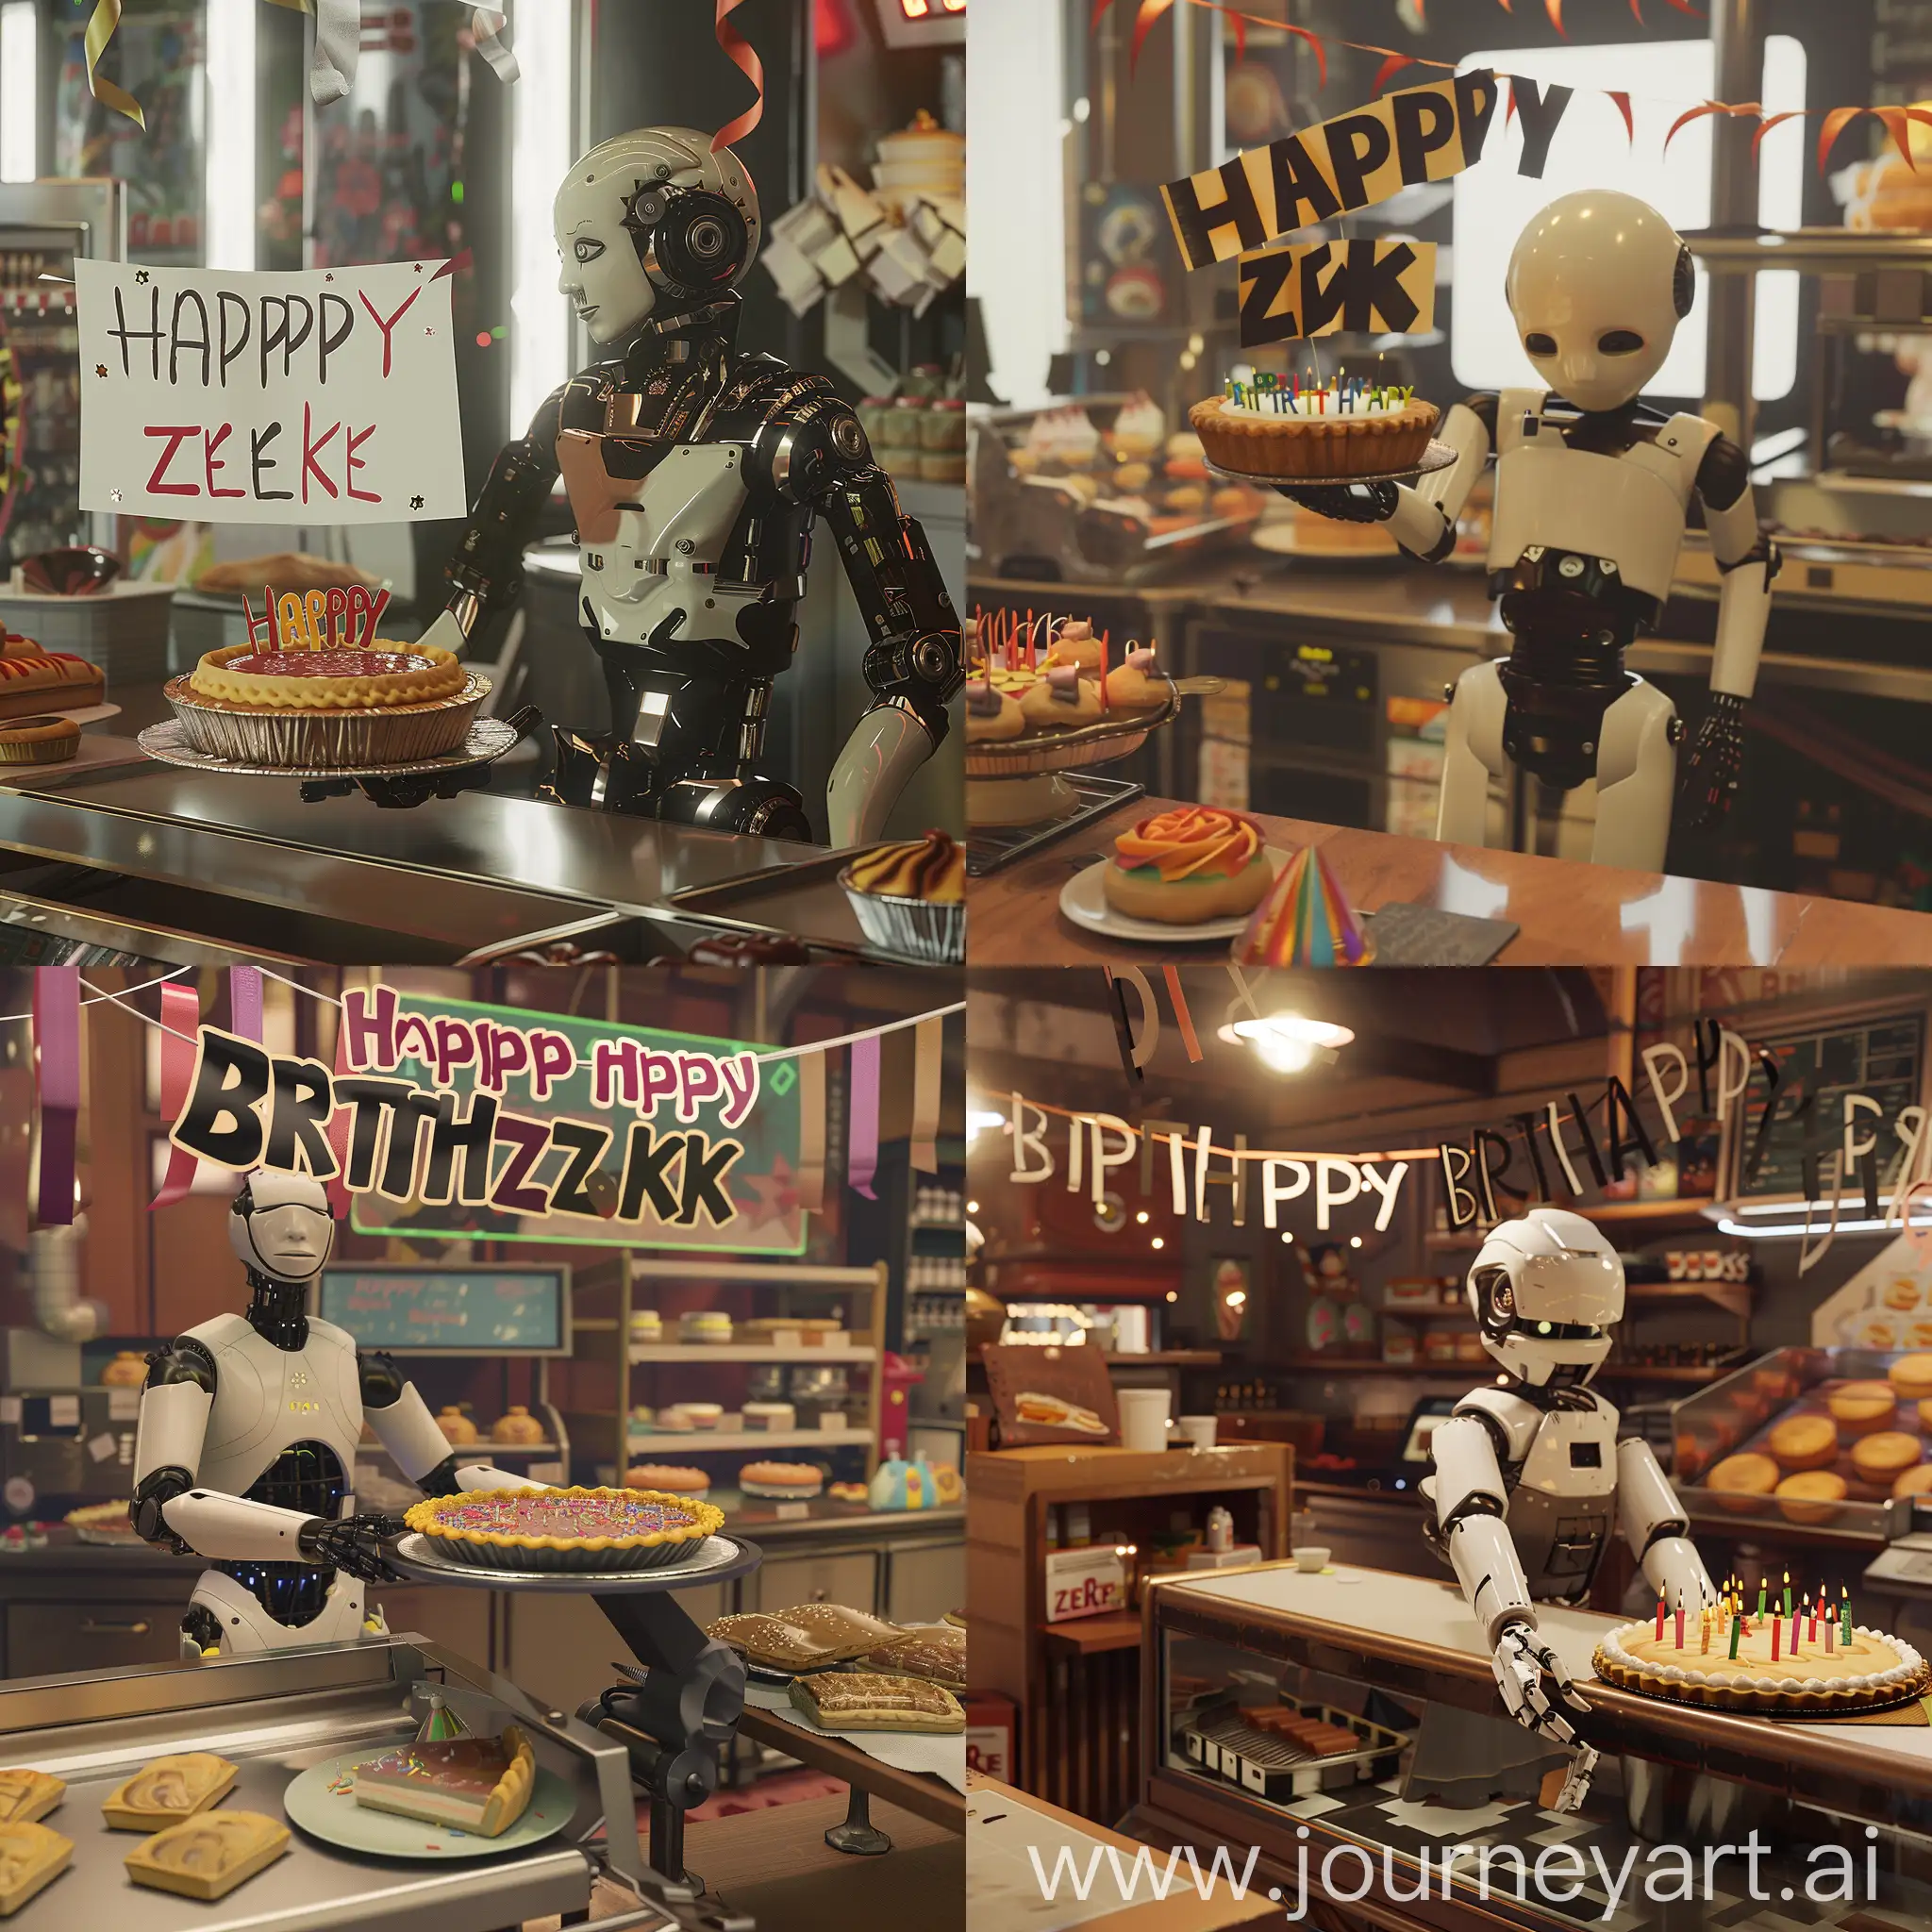 AI-Serving-Happy-Birthday-Pie-at-Bakery-Celebration